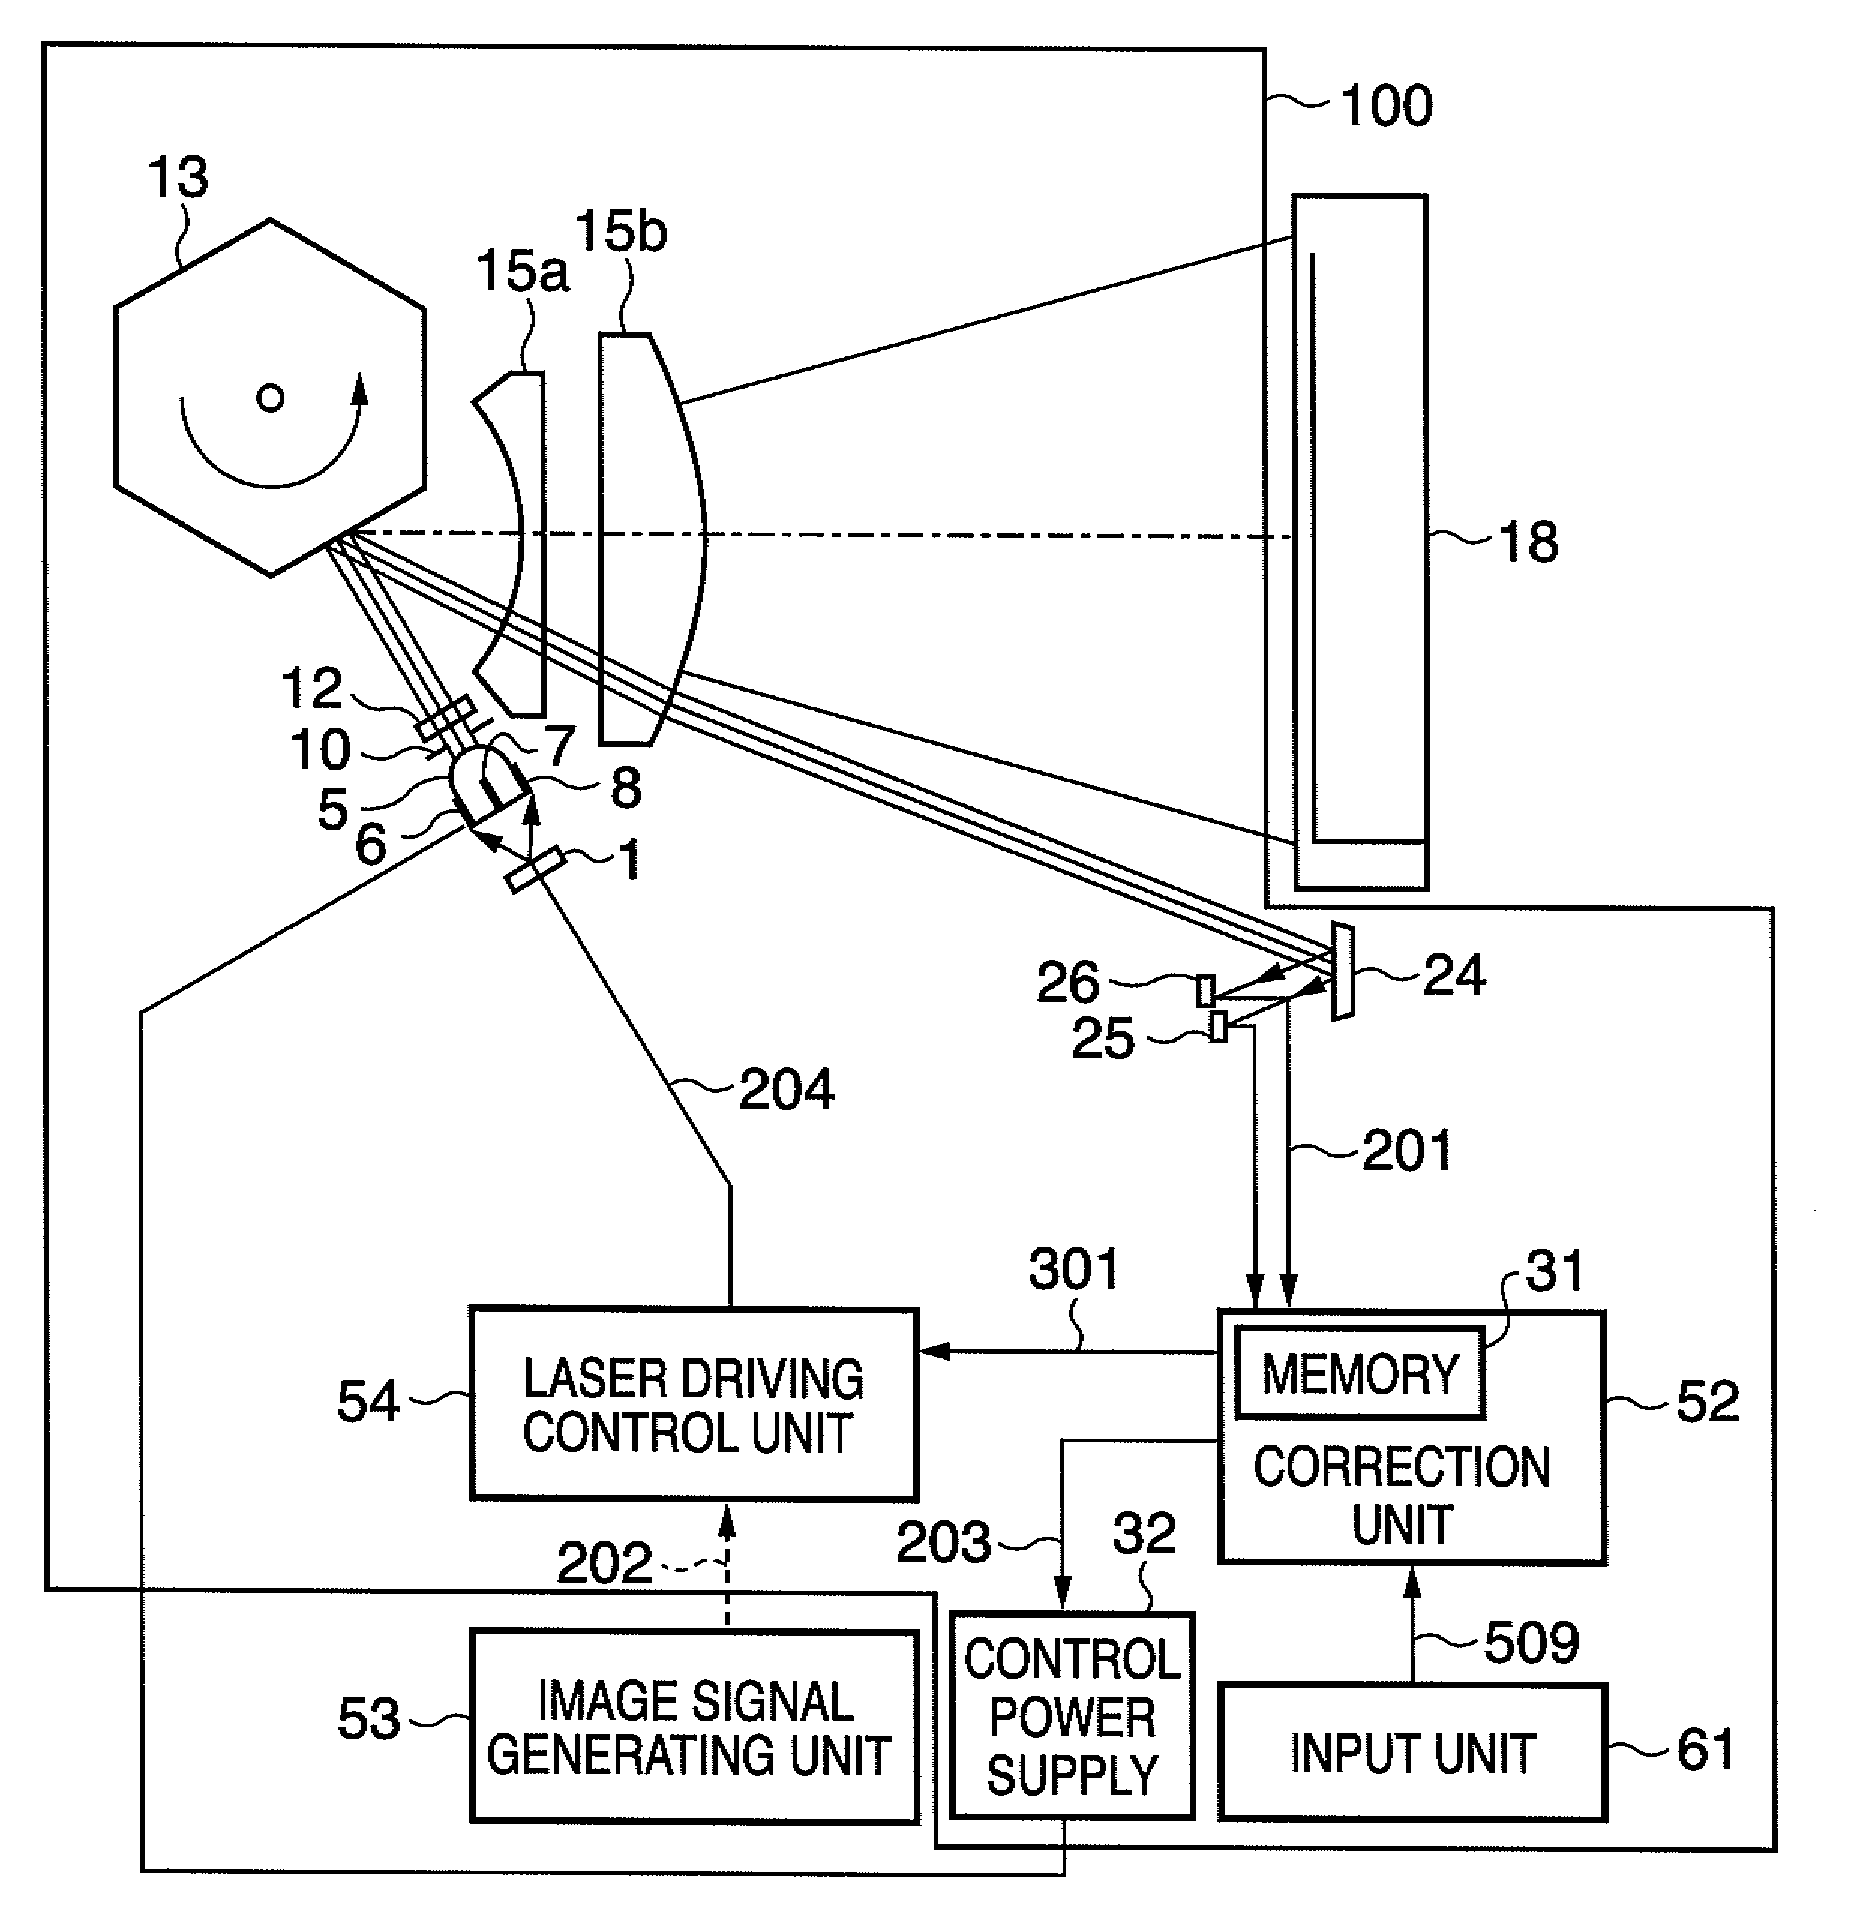 Optical scanning apparatus